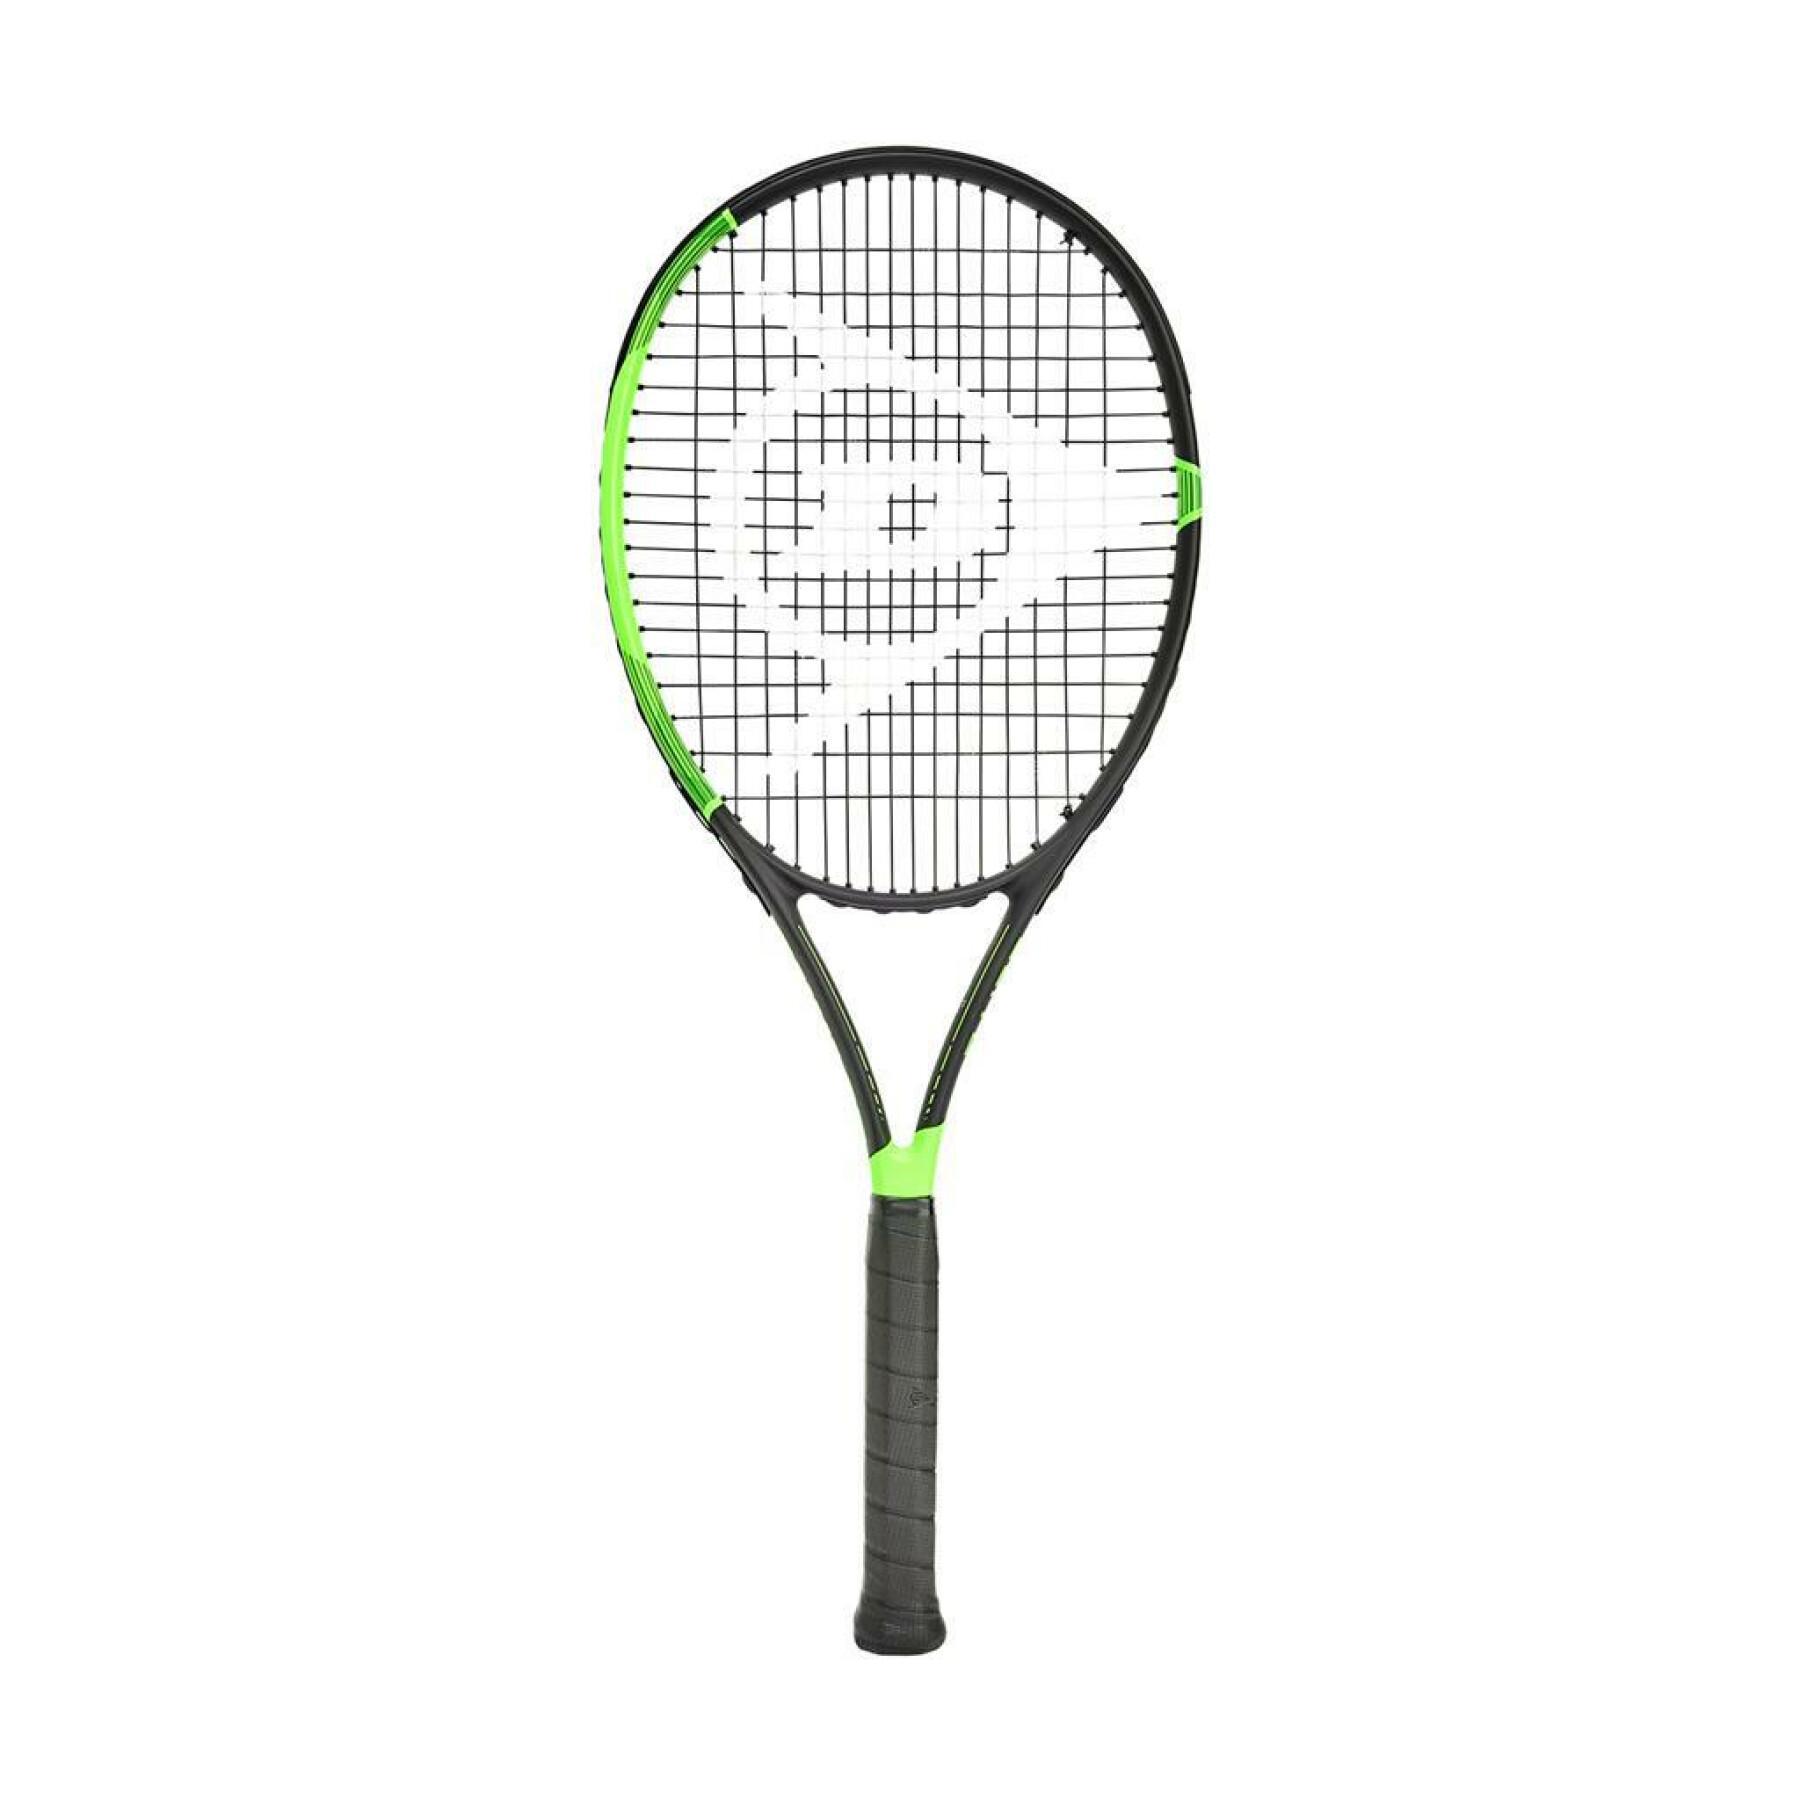 Racket Dunlop elite 270 g0